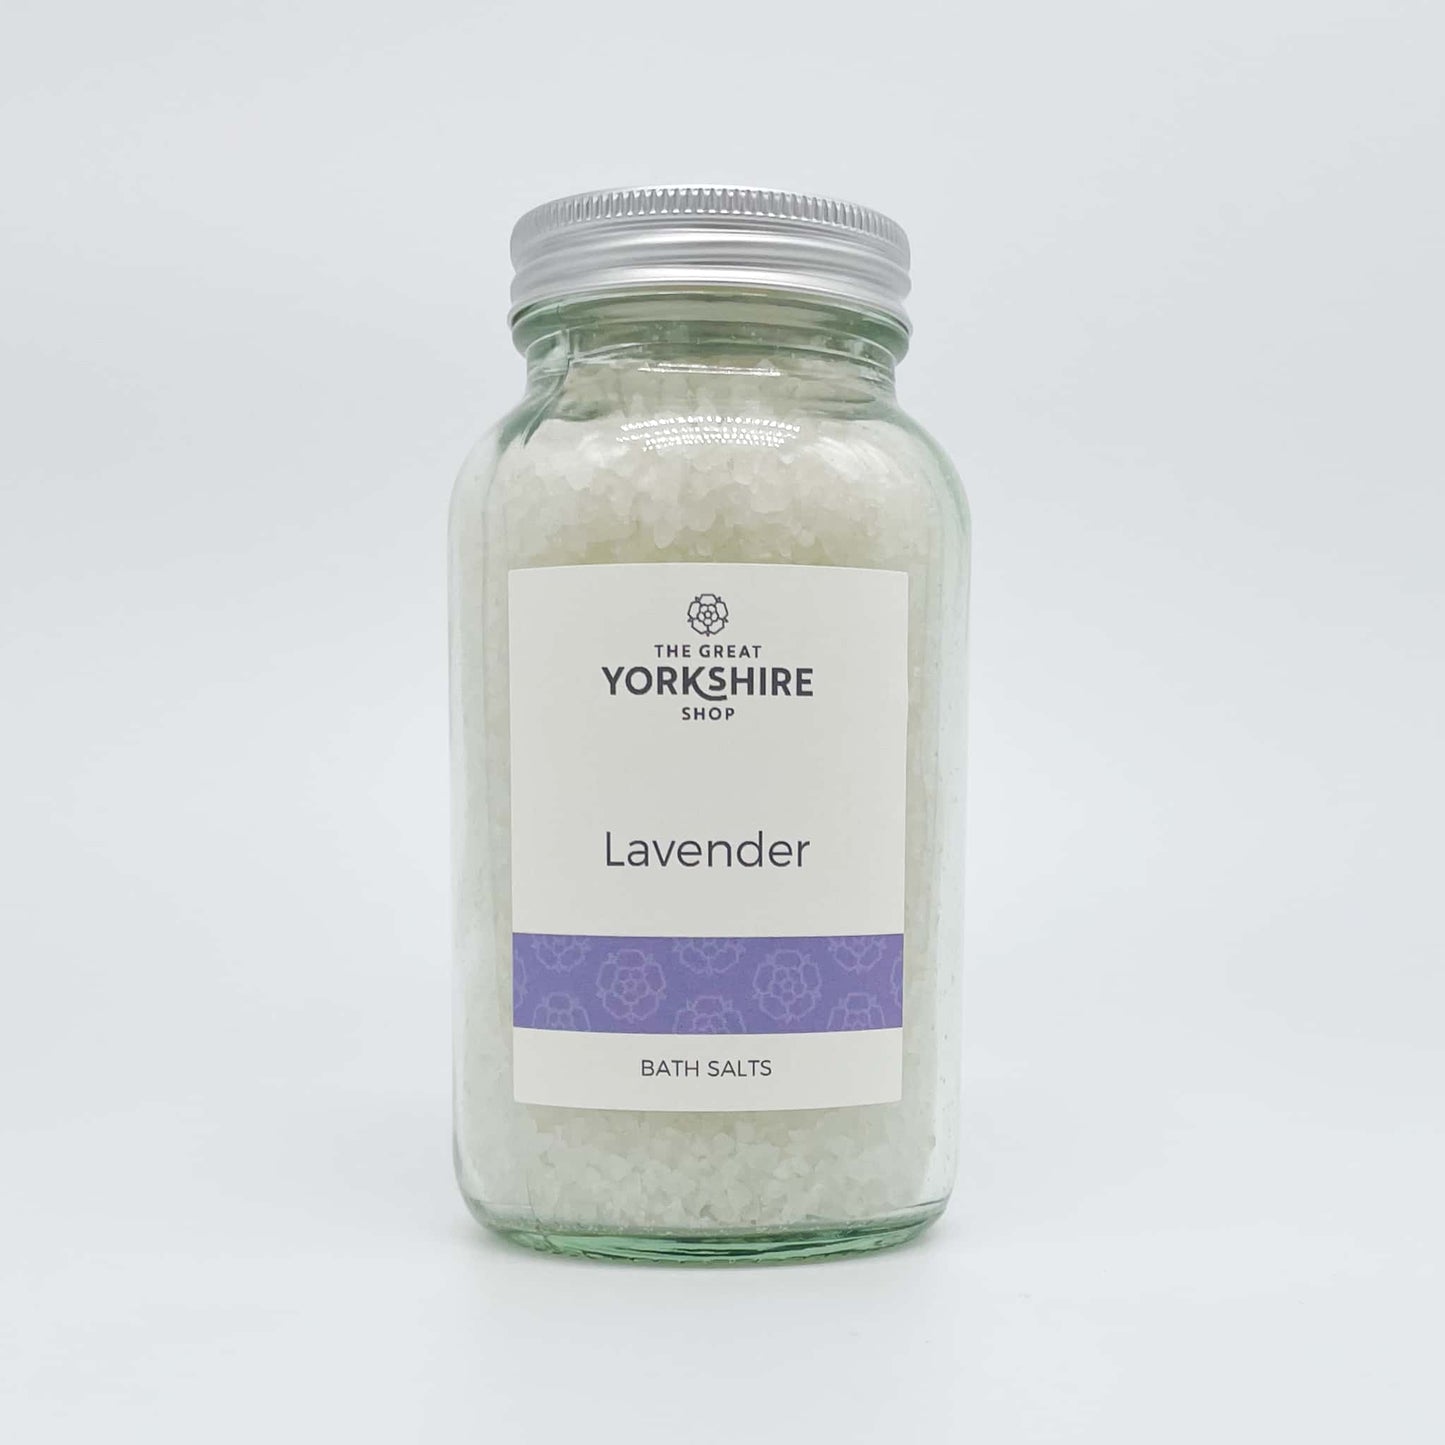 Lavender Bath Salts - The Great Yorkshire Shop